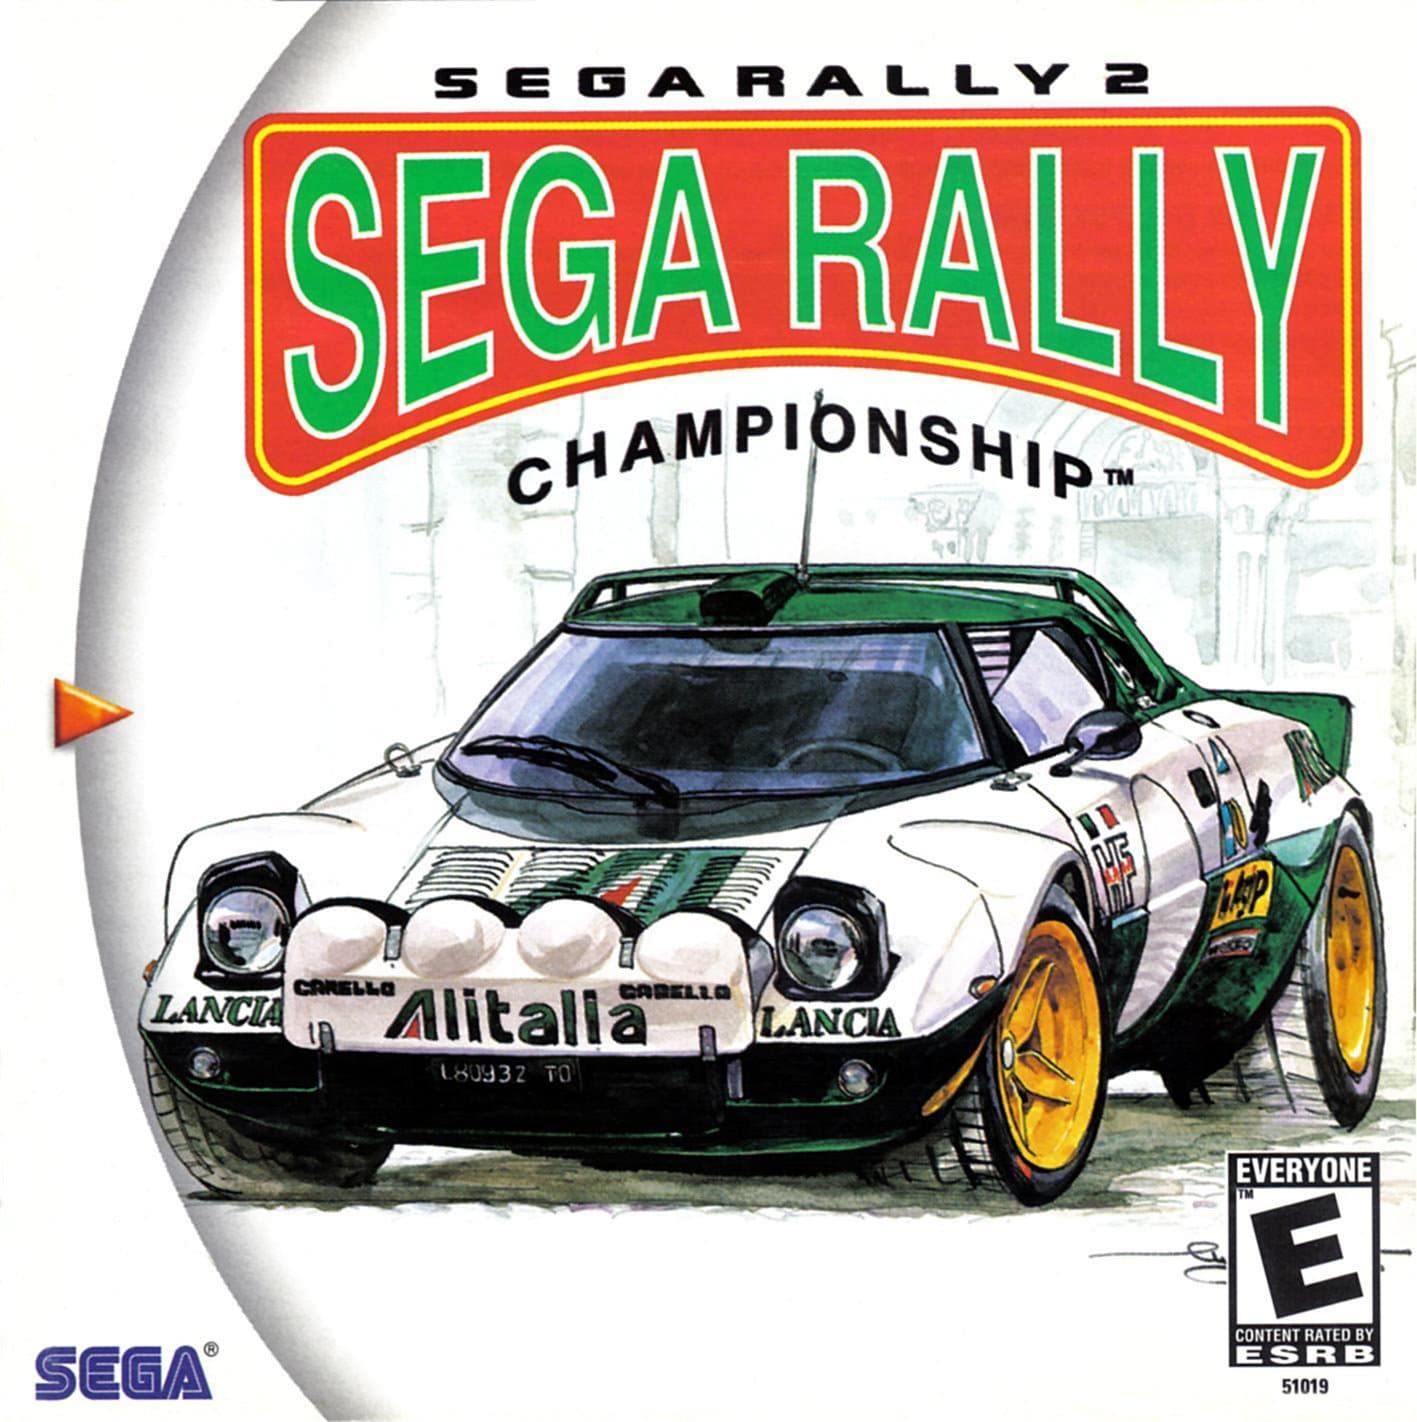 Sega Rally Championship 2 player count stats